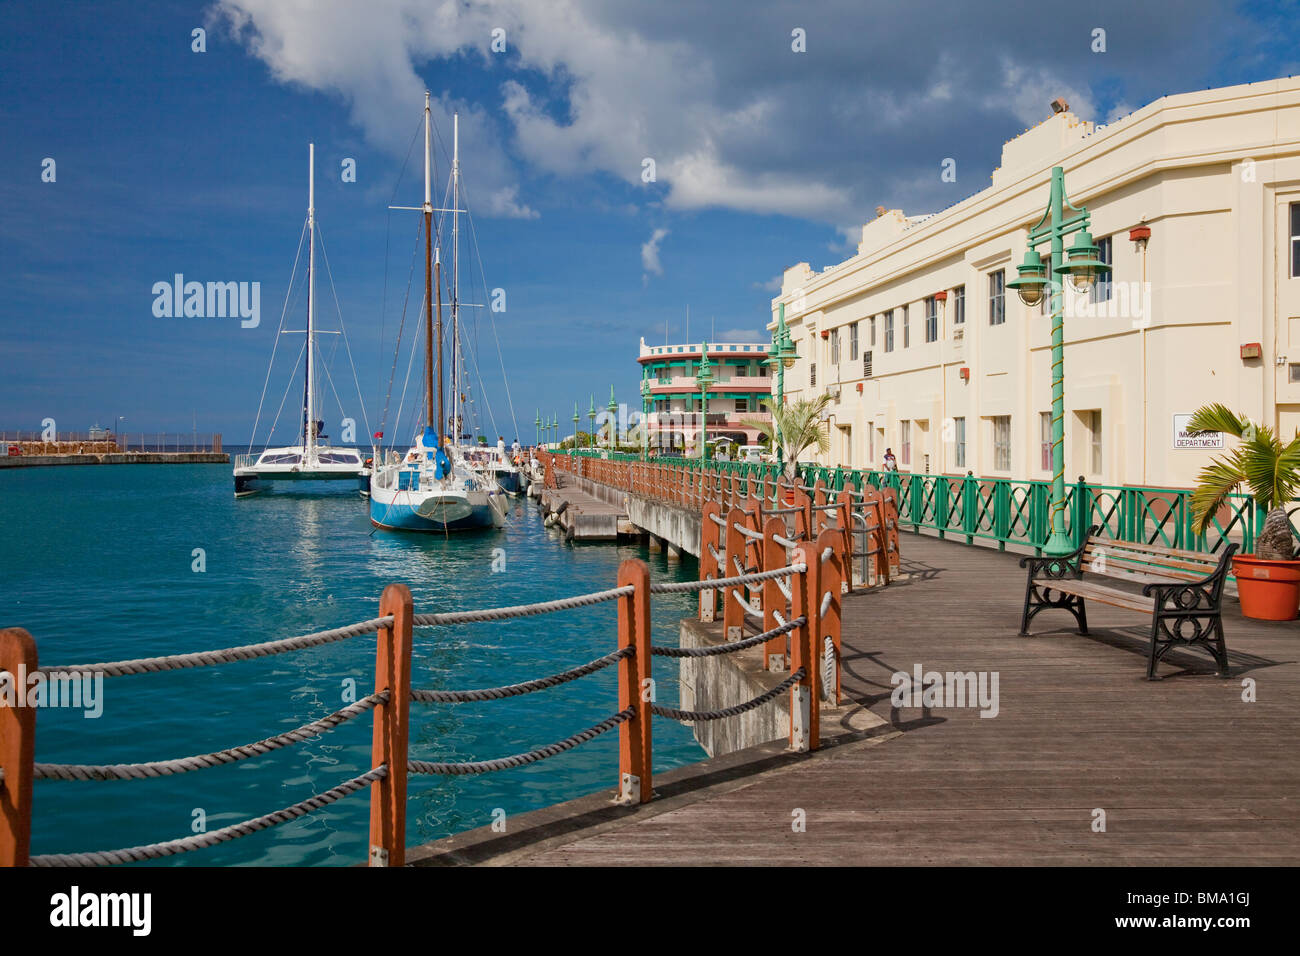 La passeggiata sul lungomare di Bridgetown, Barbados, West Indies. Foto Stock